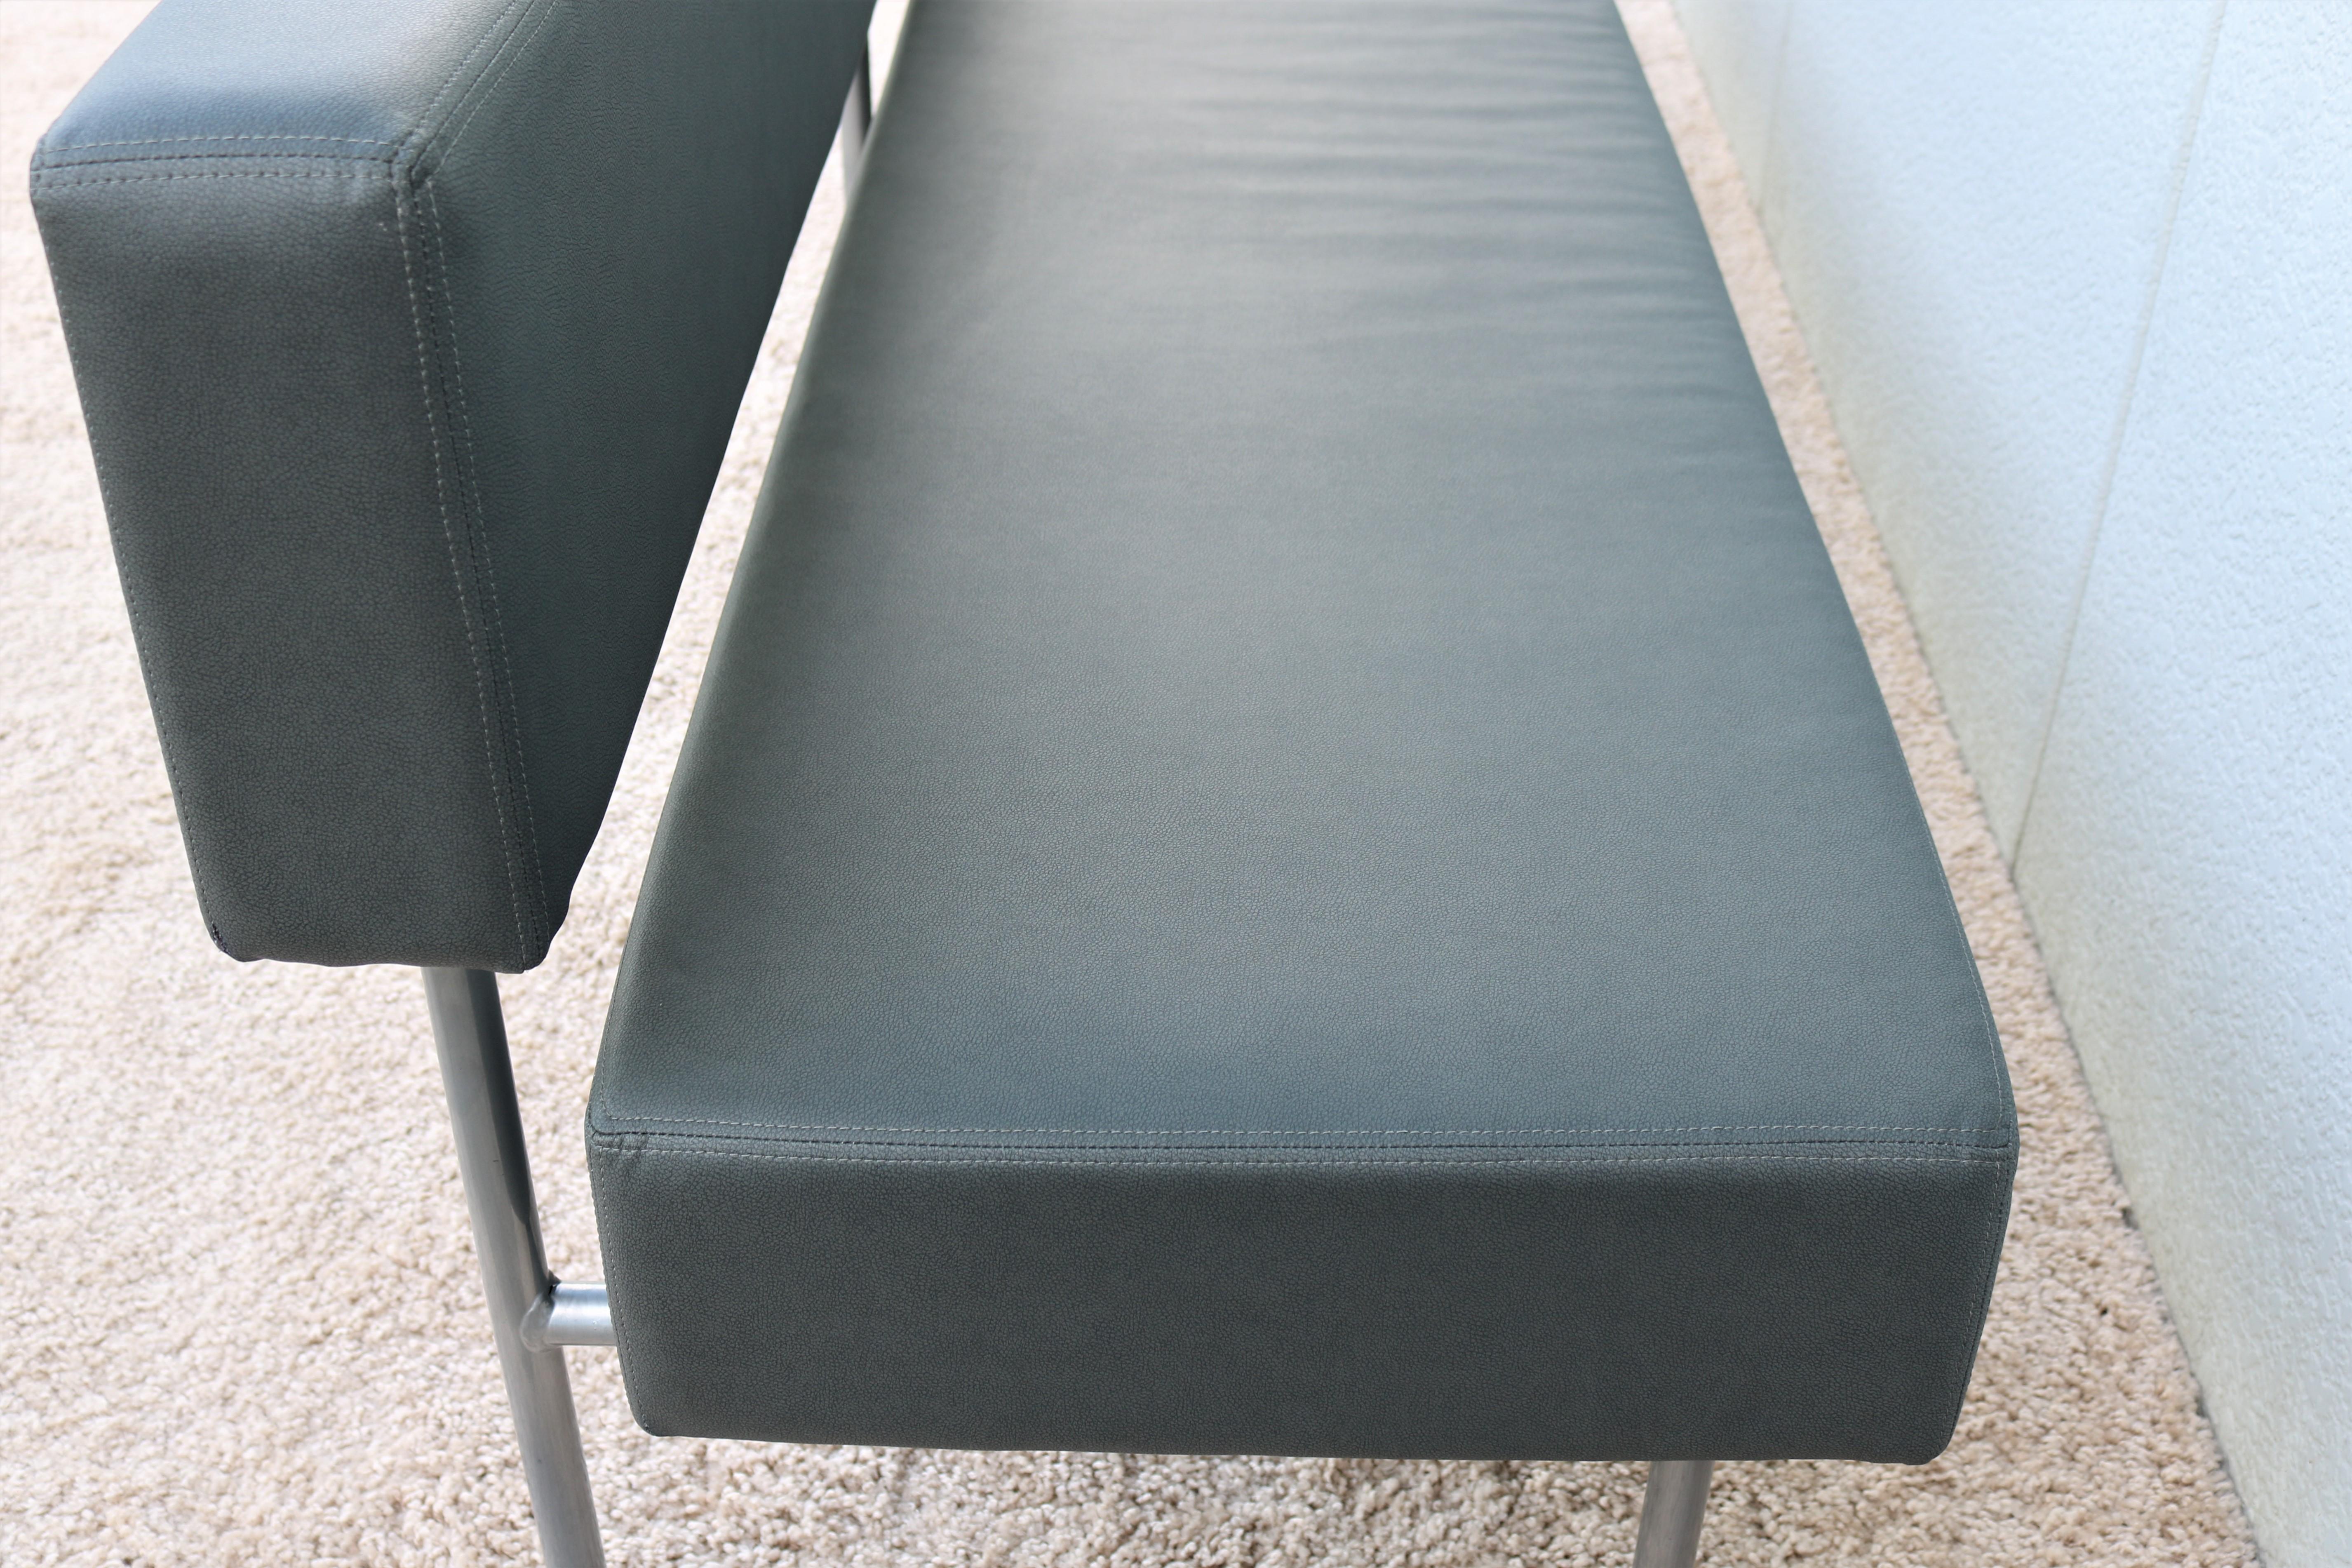 Steel Modern Hightower Longo Floating Sofa Set in Gray Ecosoft Leather Komplot Design For Sale